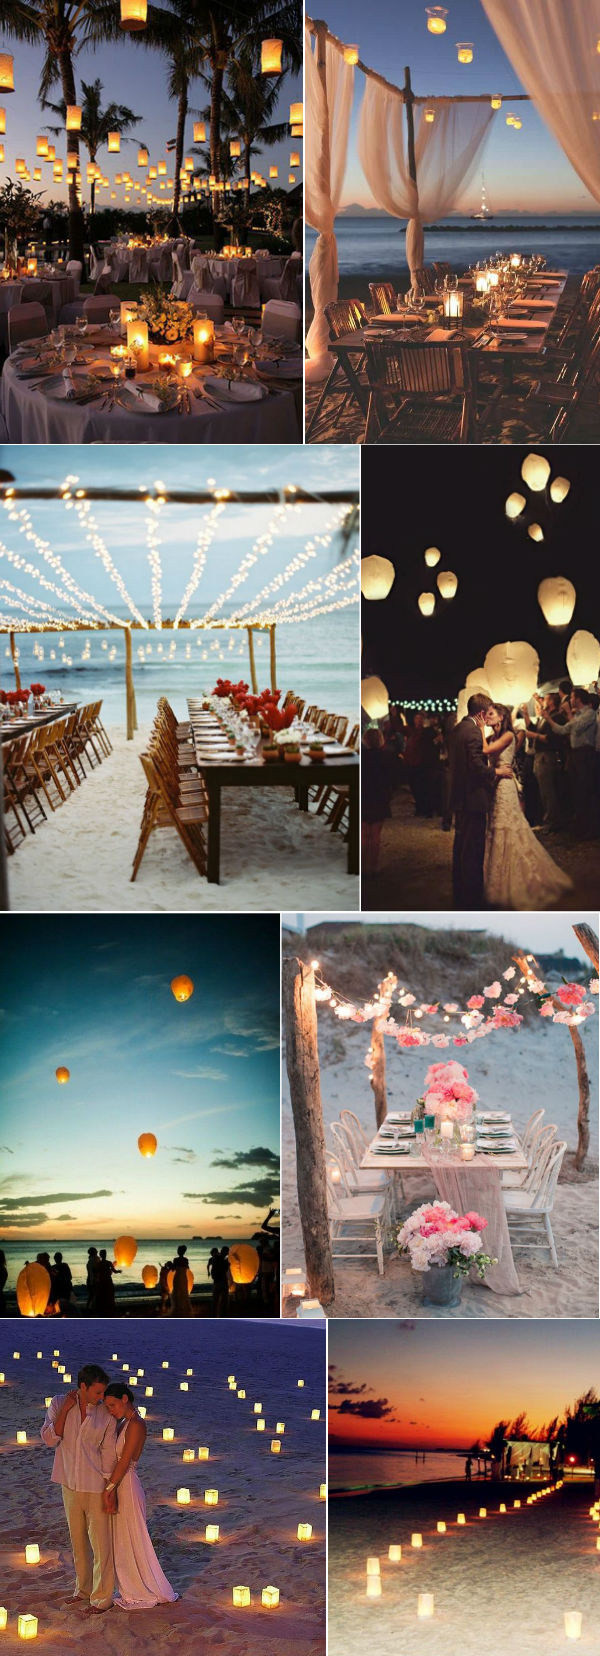 Beach Wedding Party Ideas
 32 Beach Themed Wedding Ideas For 2016 Brides